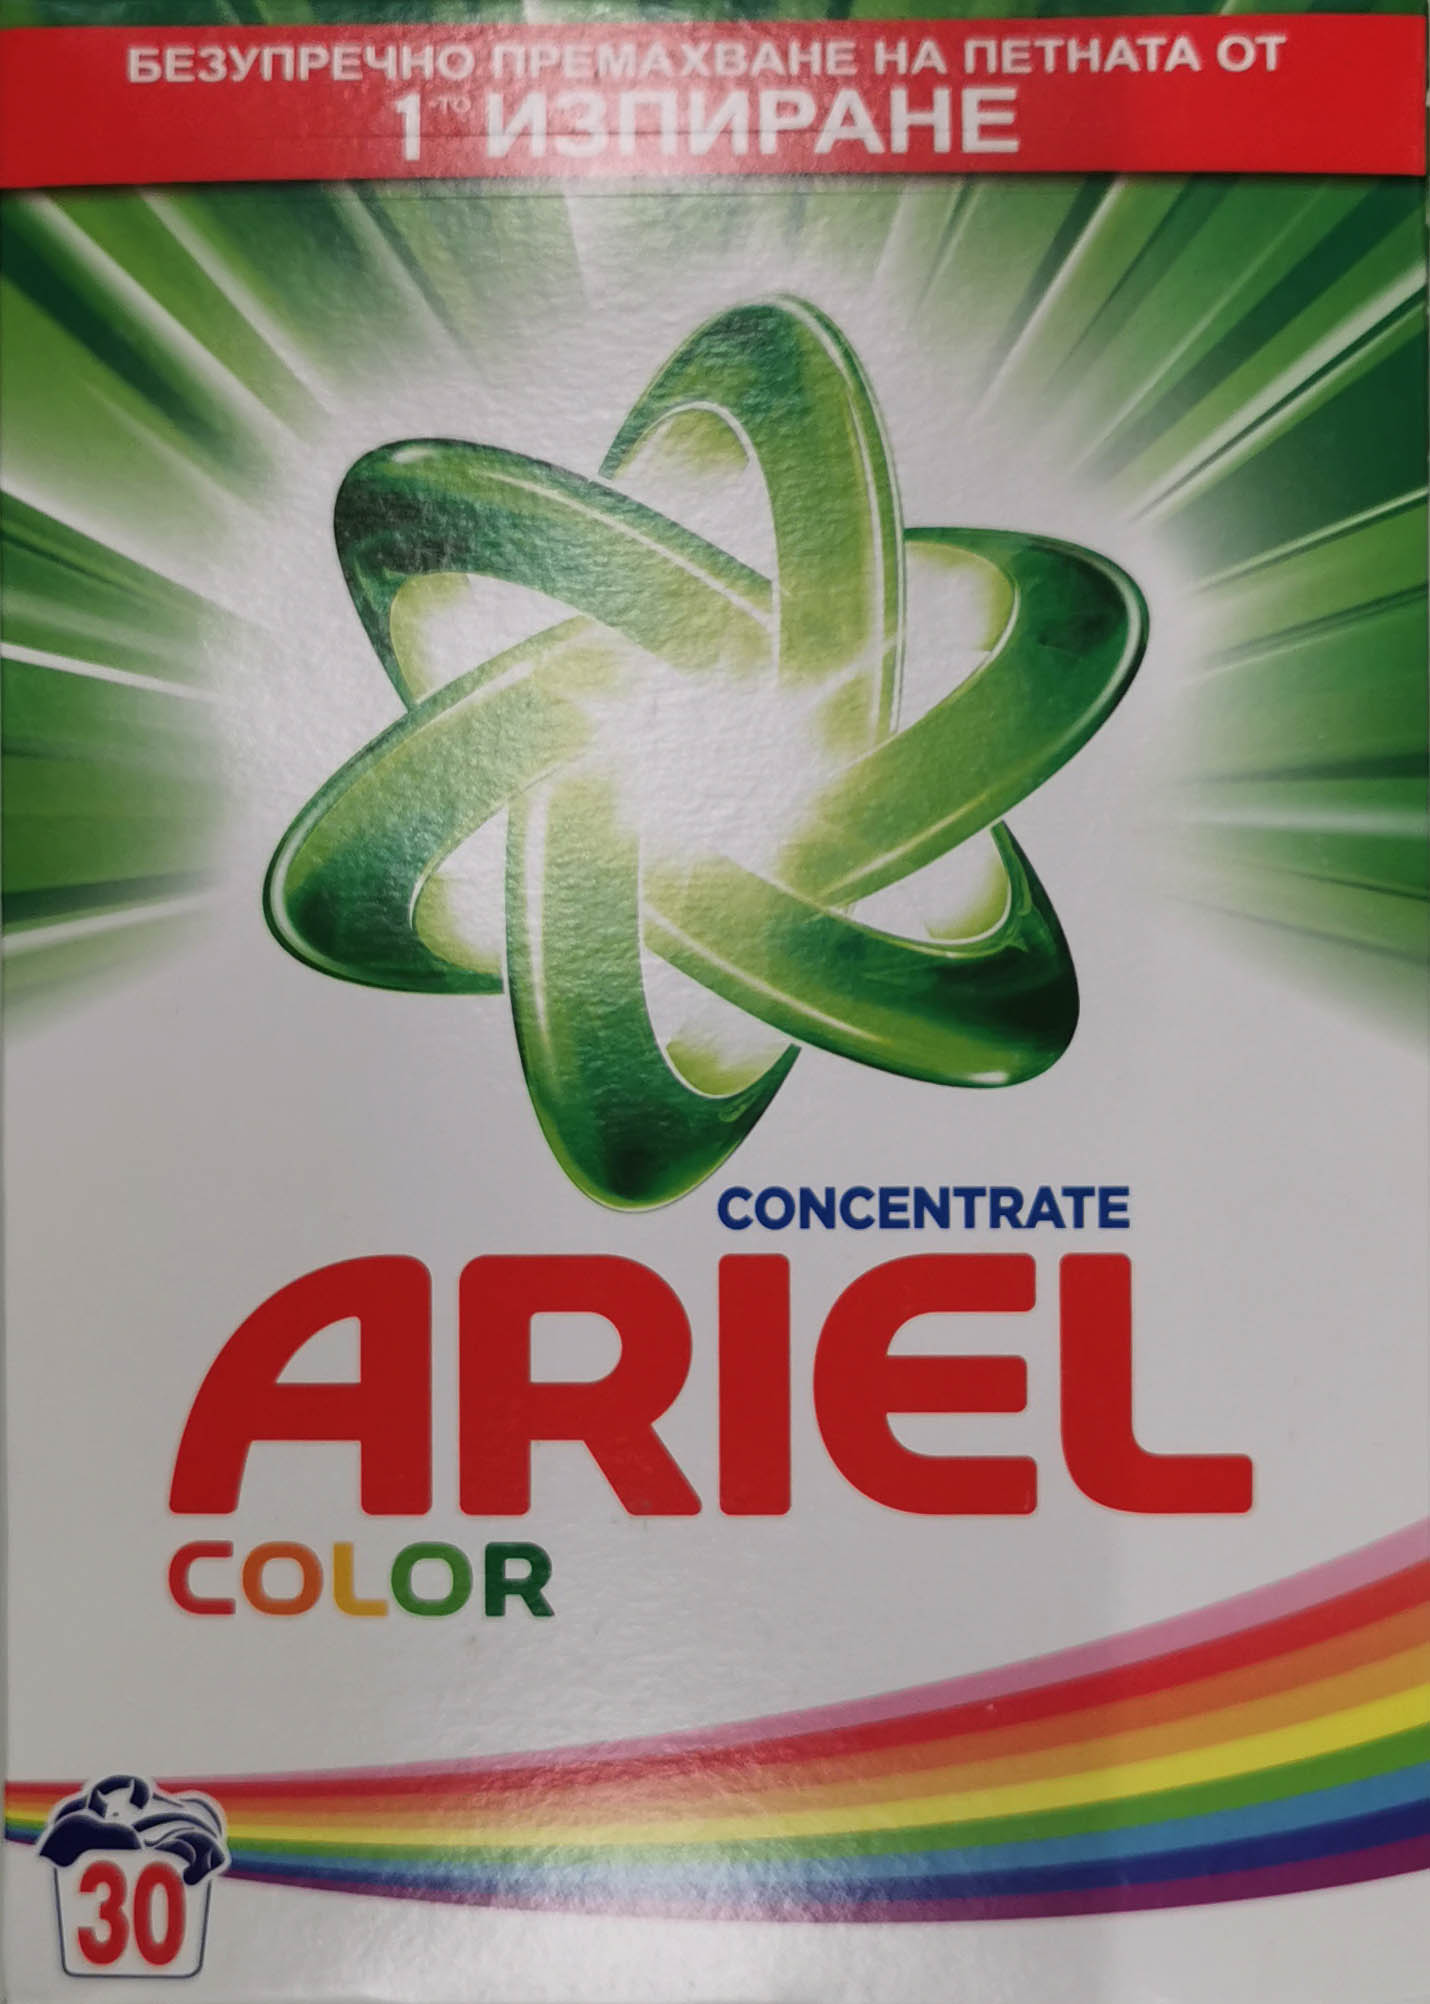 Ariel Powder Color 1.95 kg / 30w